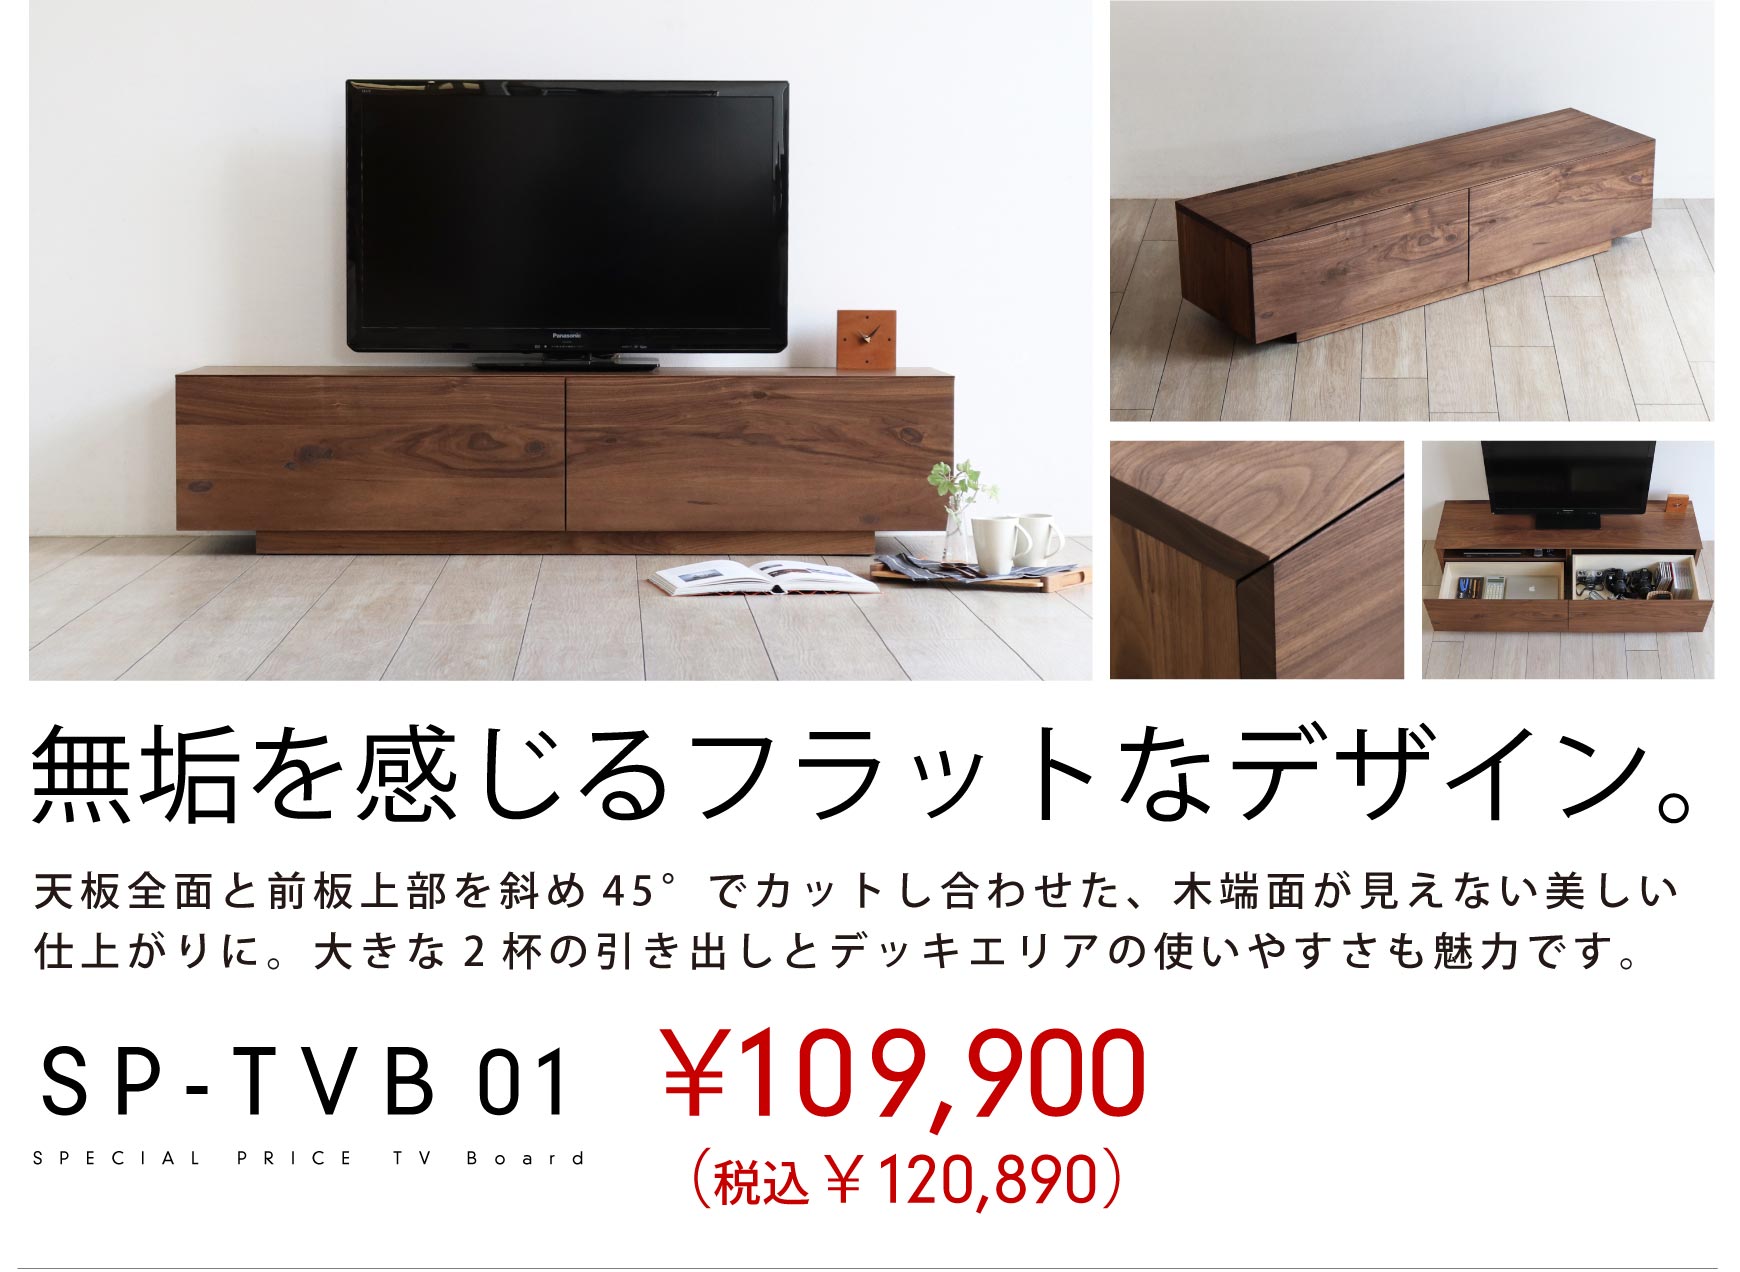 SP-TVB01 表情豊かな無垢の風合い、お買い求めやすいテレビボード